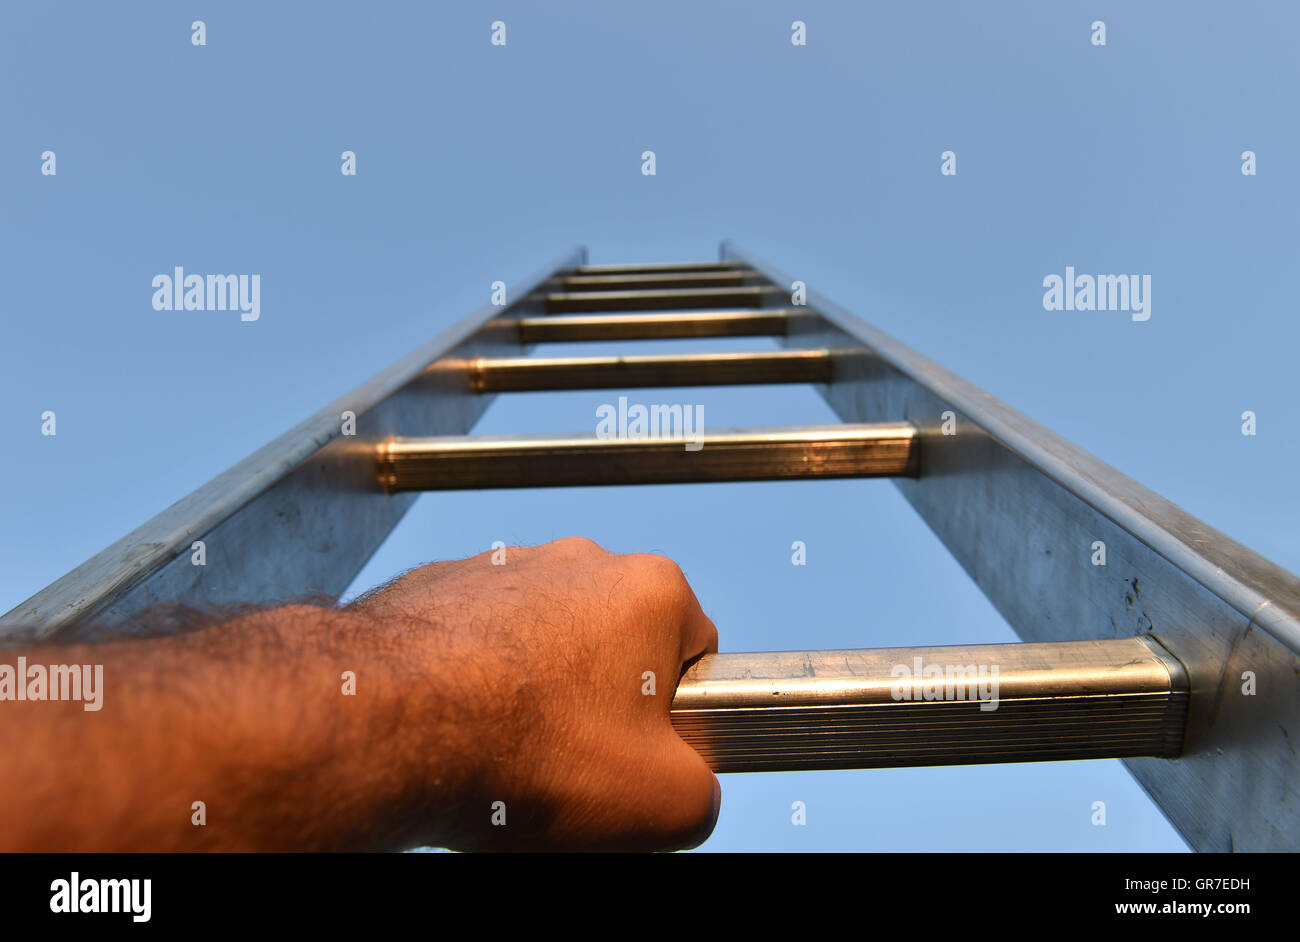 Ladder Of Success Stock Photo